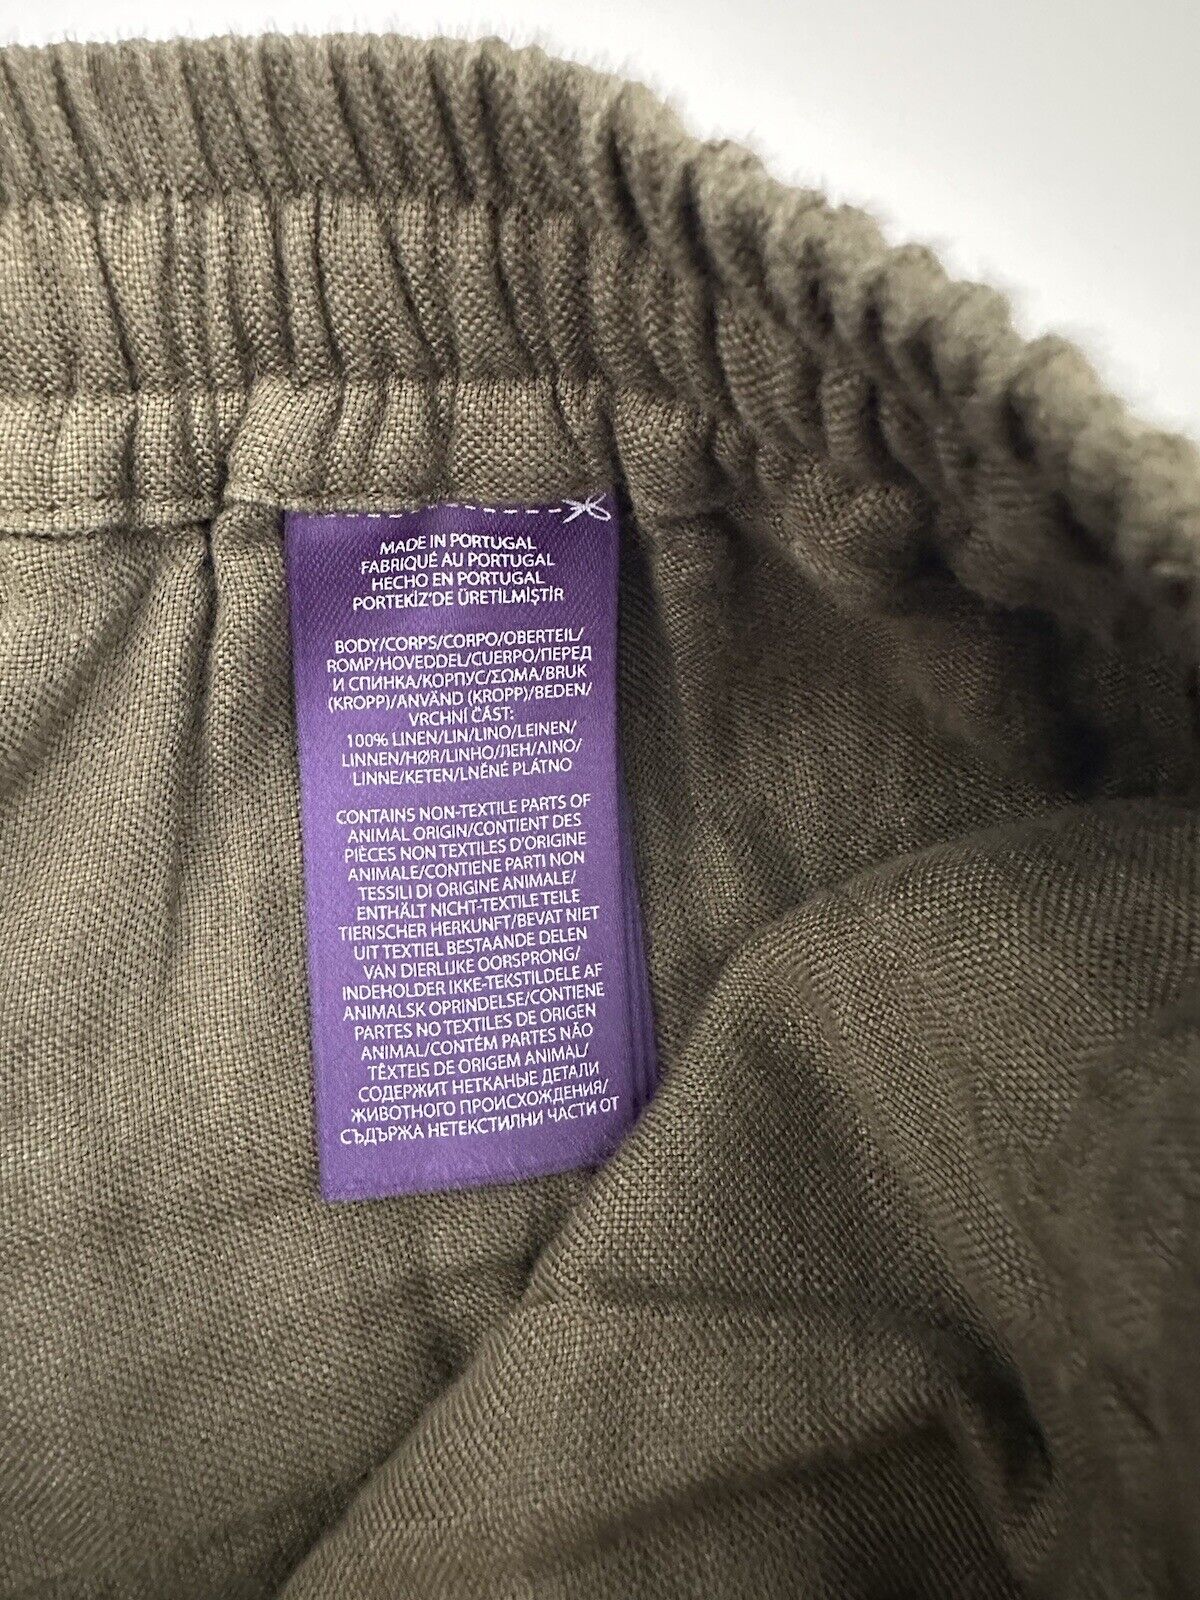 Polo Ralph Lauren Purple Label Men's Green Linen Shorts  32 US Portugal NWT$495